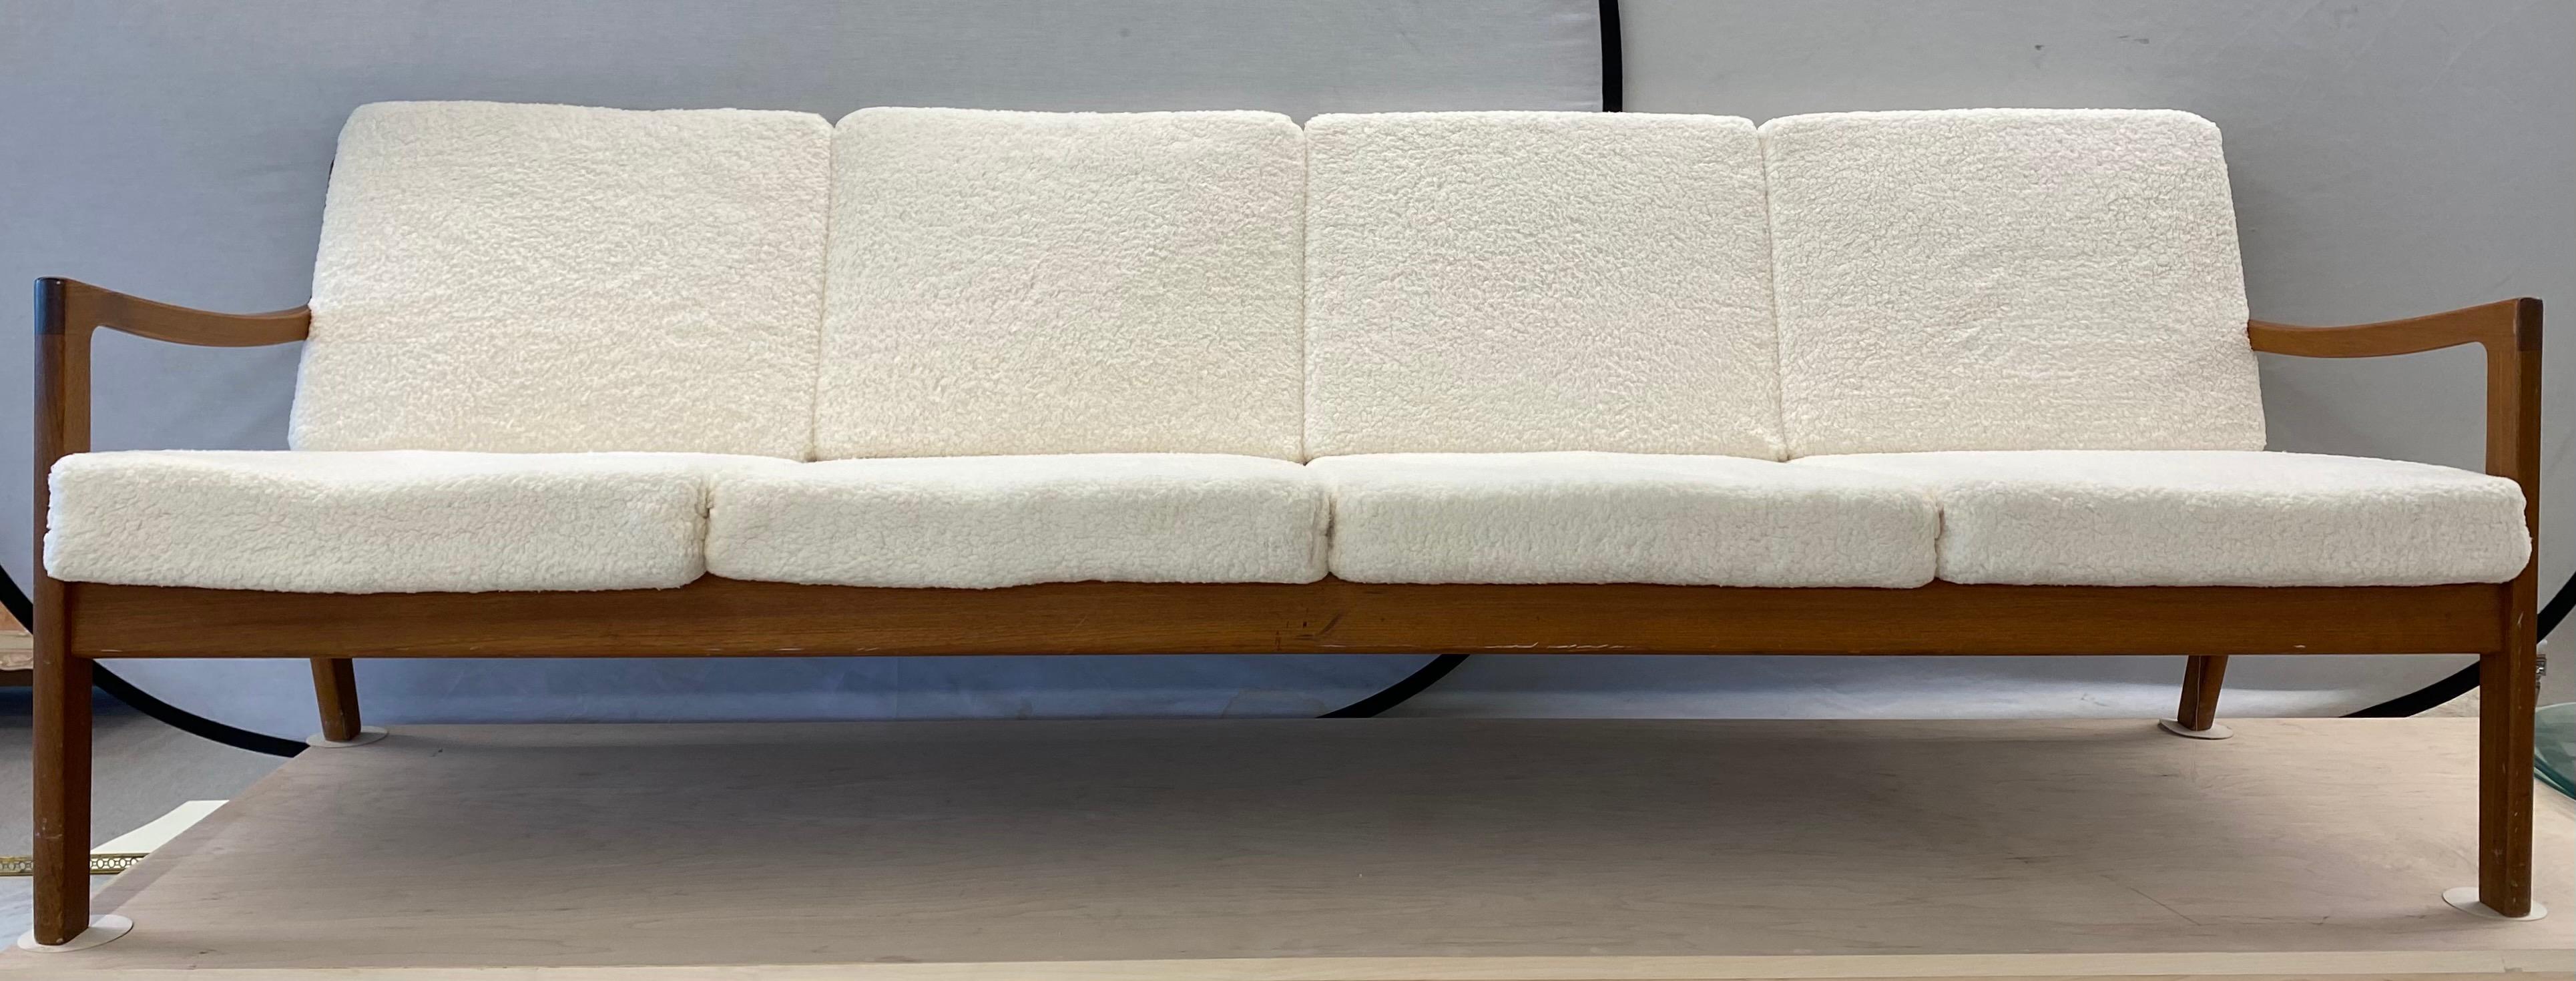 20th Century Ole Wanscher for John Stuart Danish Modern Sherpa Couch Sofa, Mid Century Modern